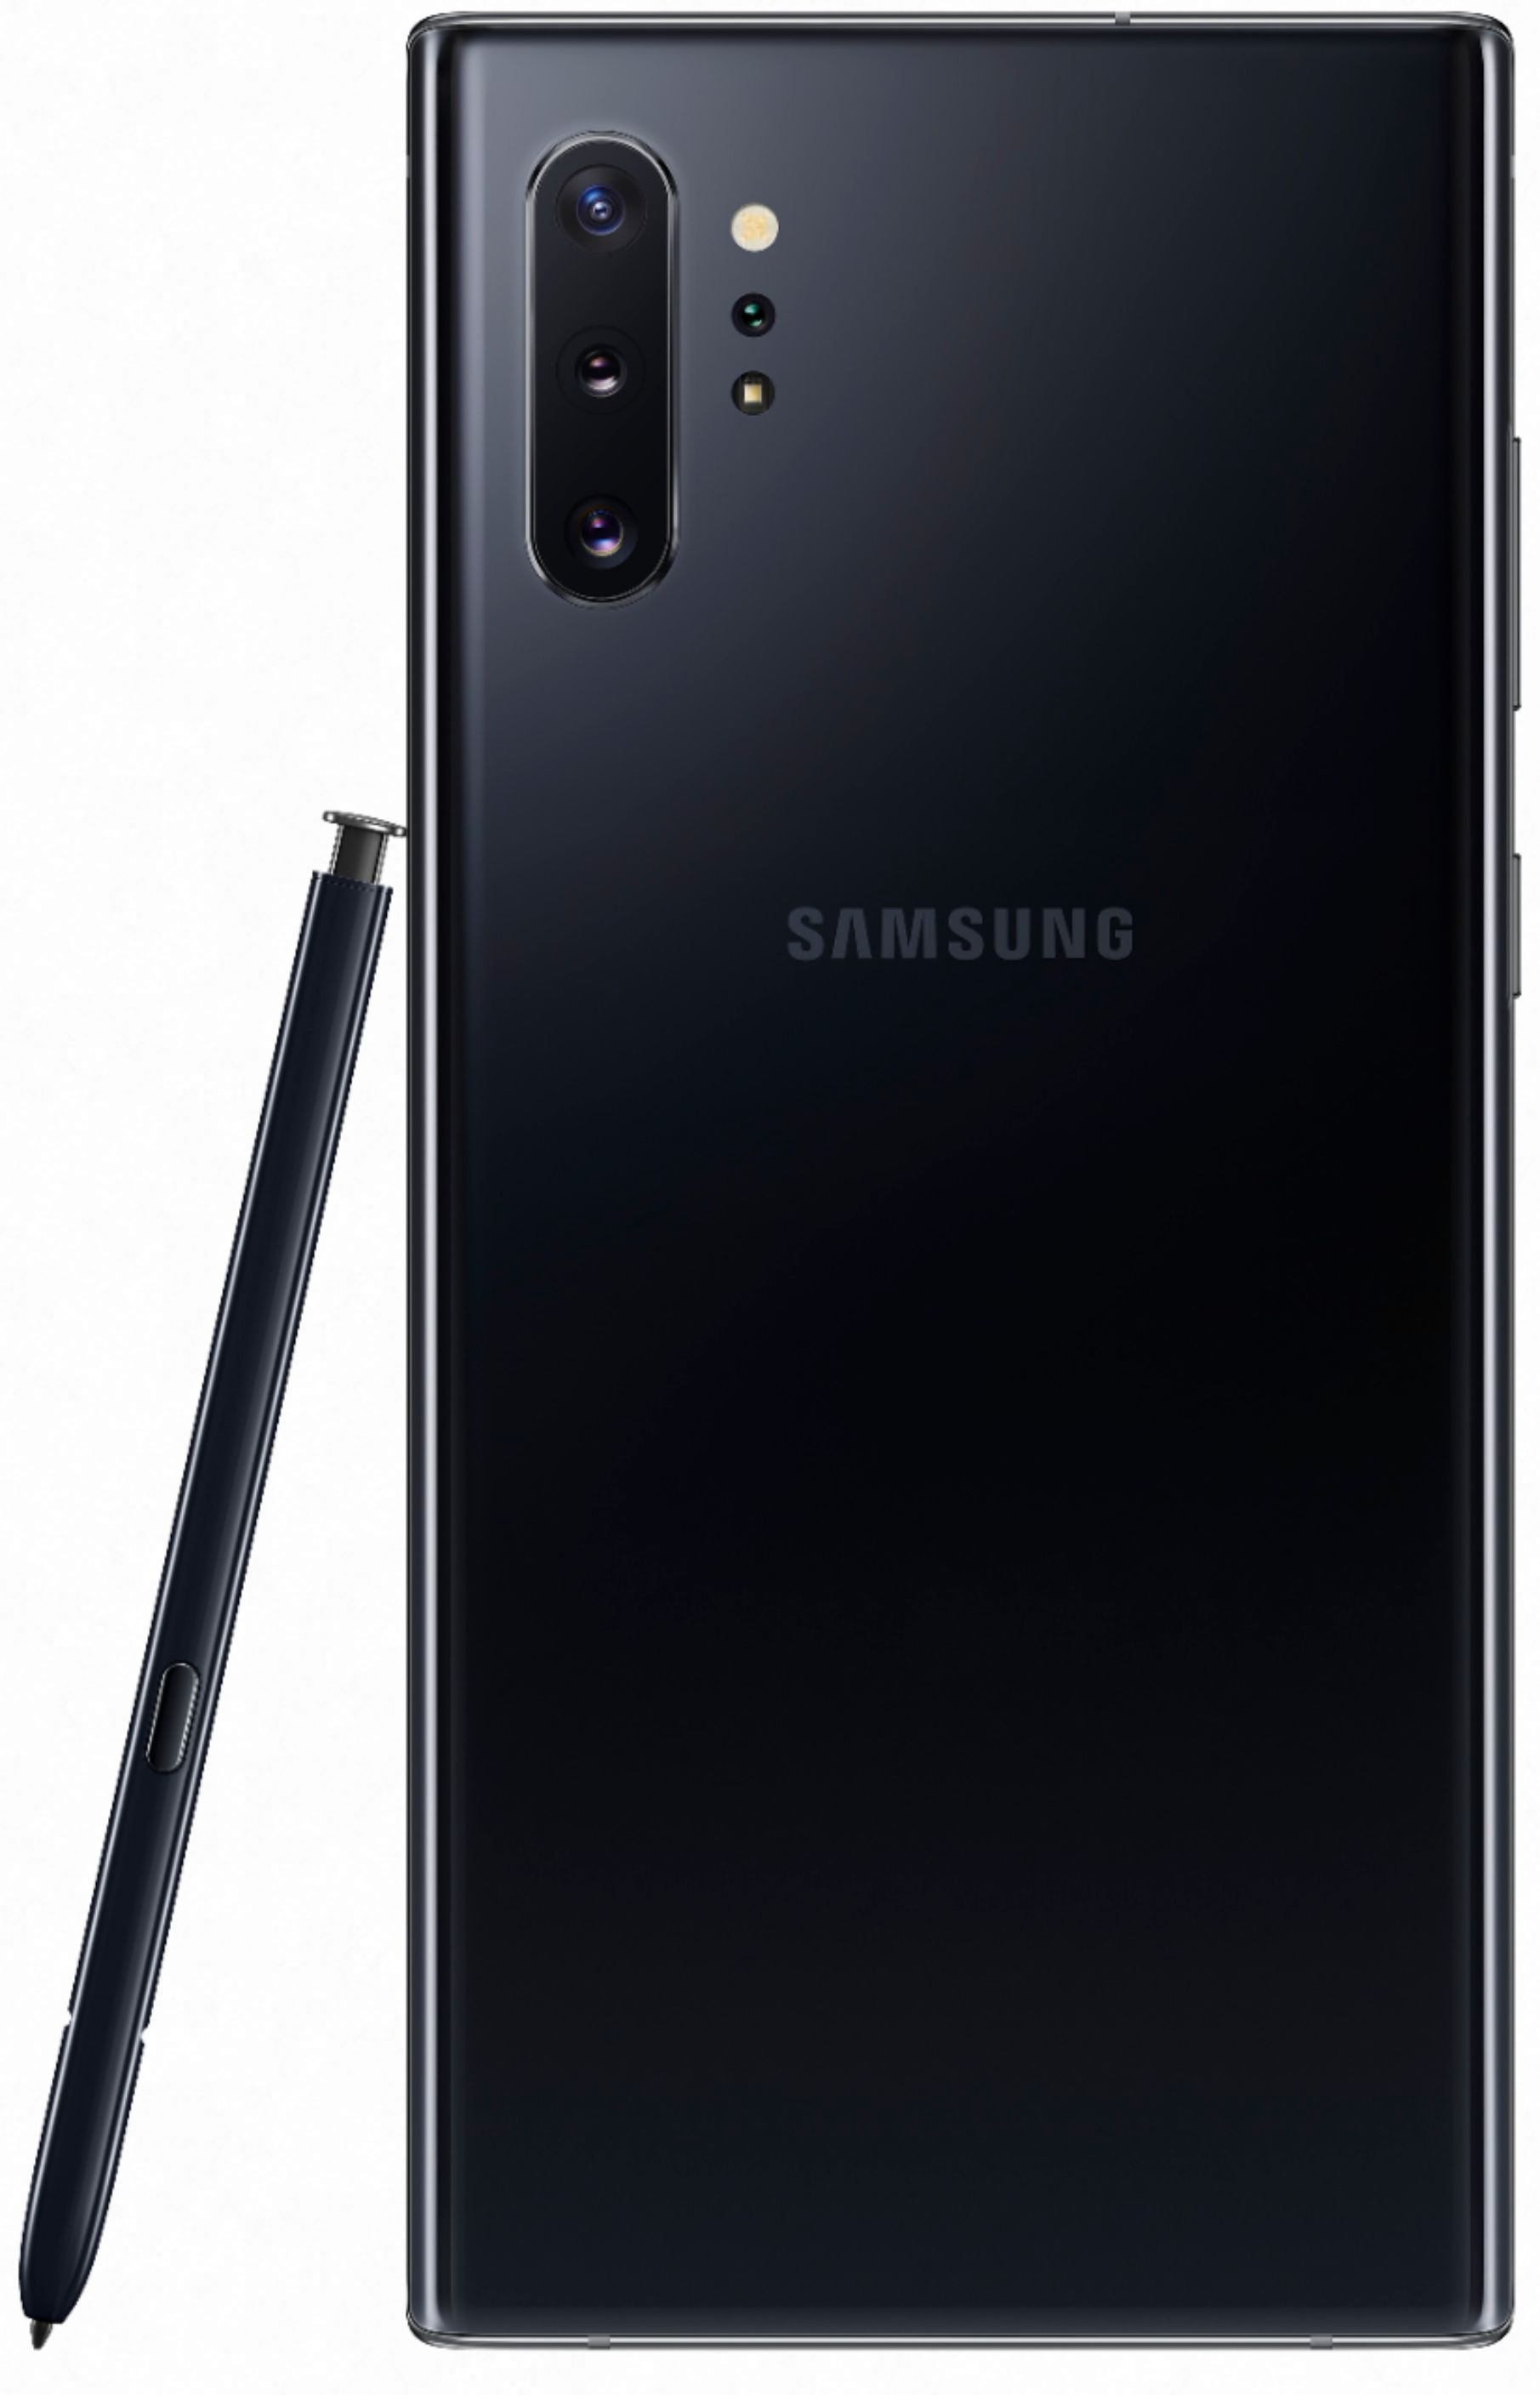 SAMSUNG Unlocked Galaxy Note 10, 256GB Black - Smartphone